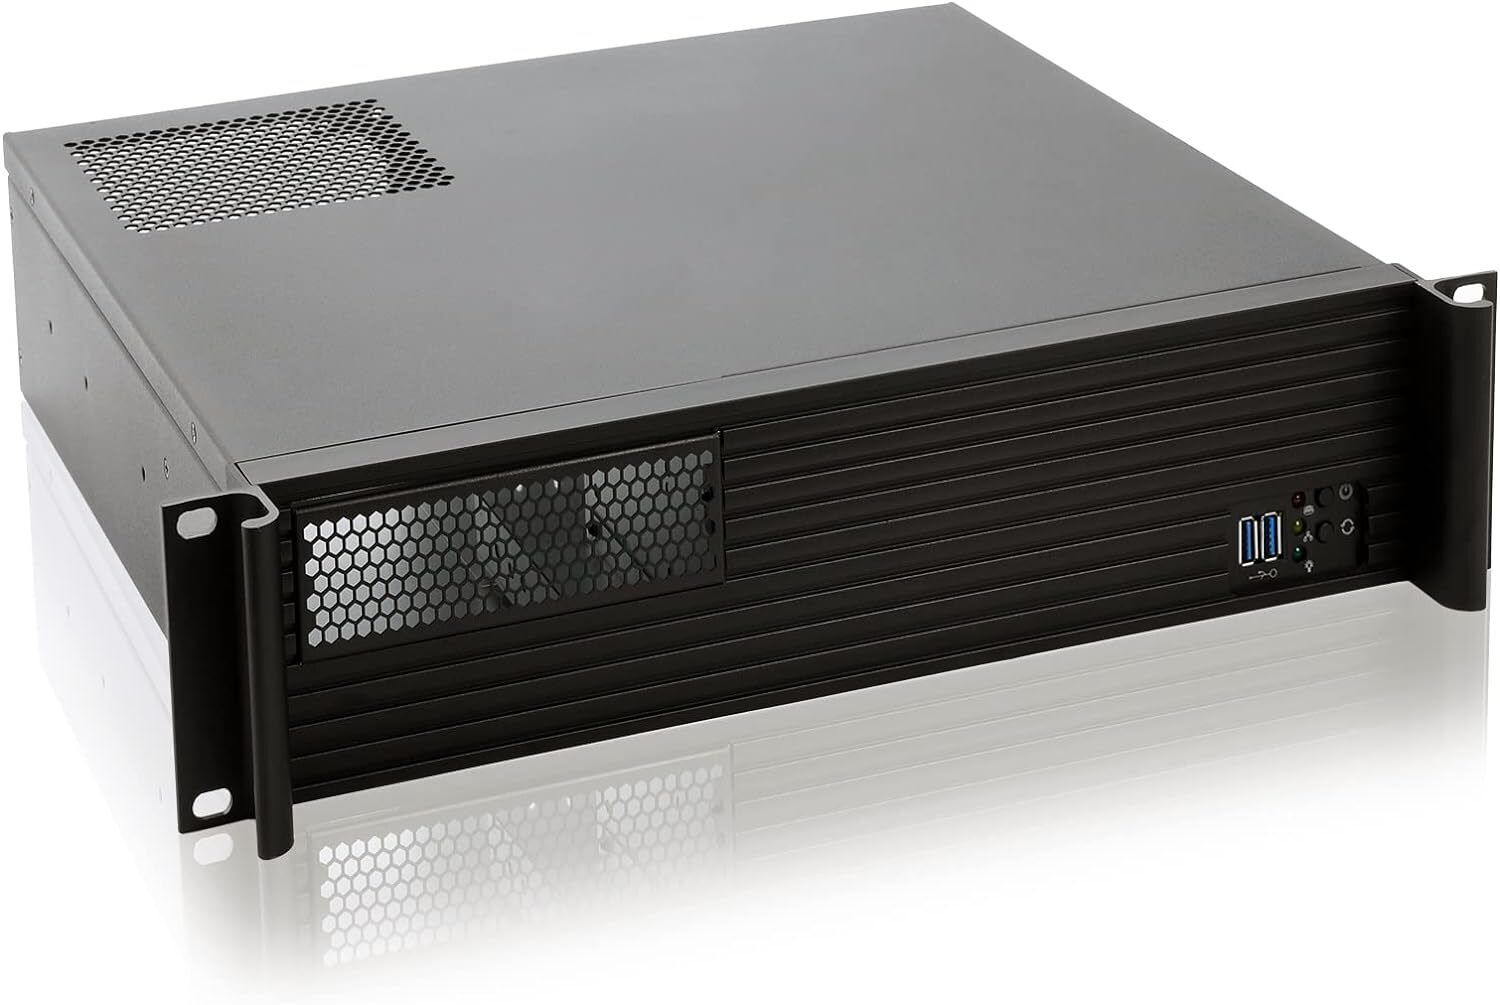 3U Short Depth Rackmount Server Chassis Micro Atx/Mini-Itx 1x5.25+4x3.5 Bays Sup